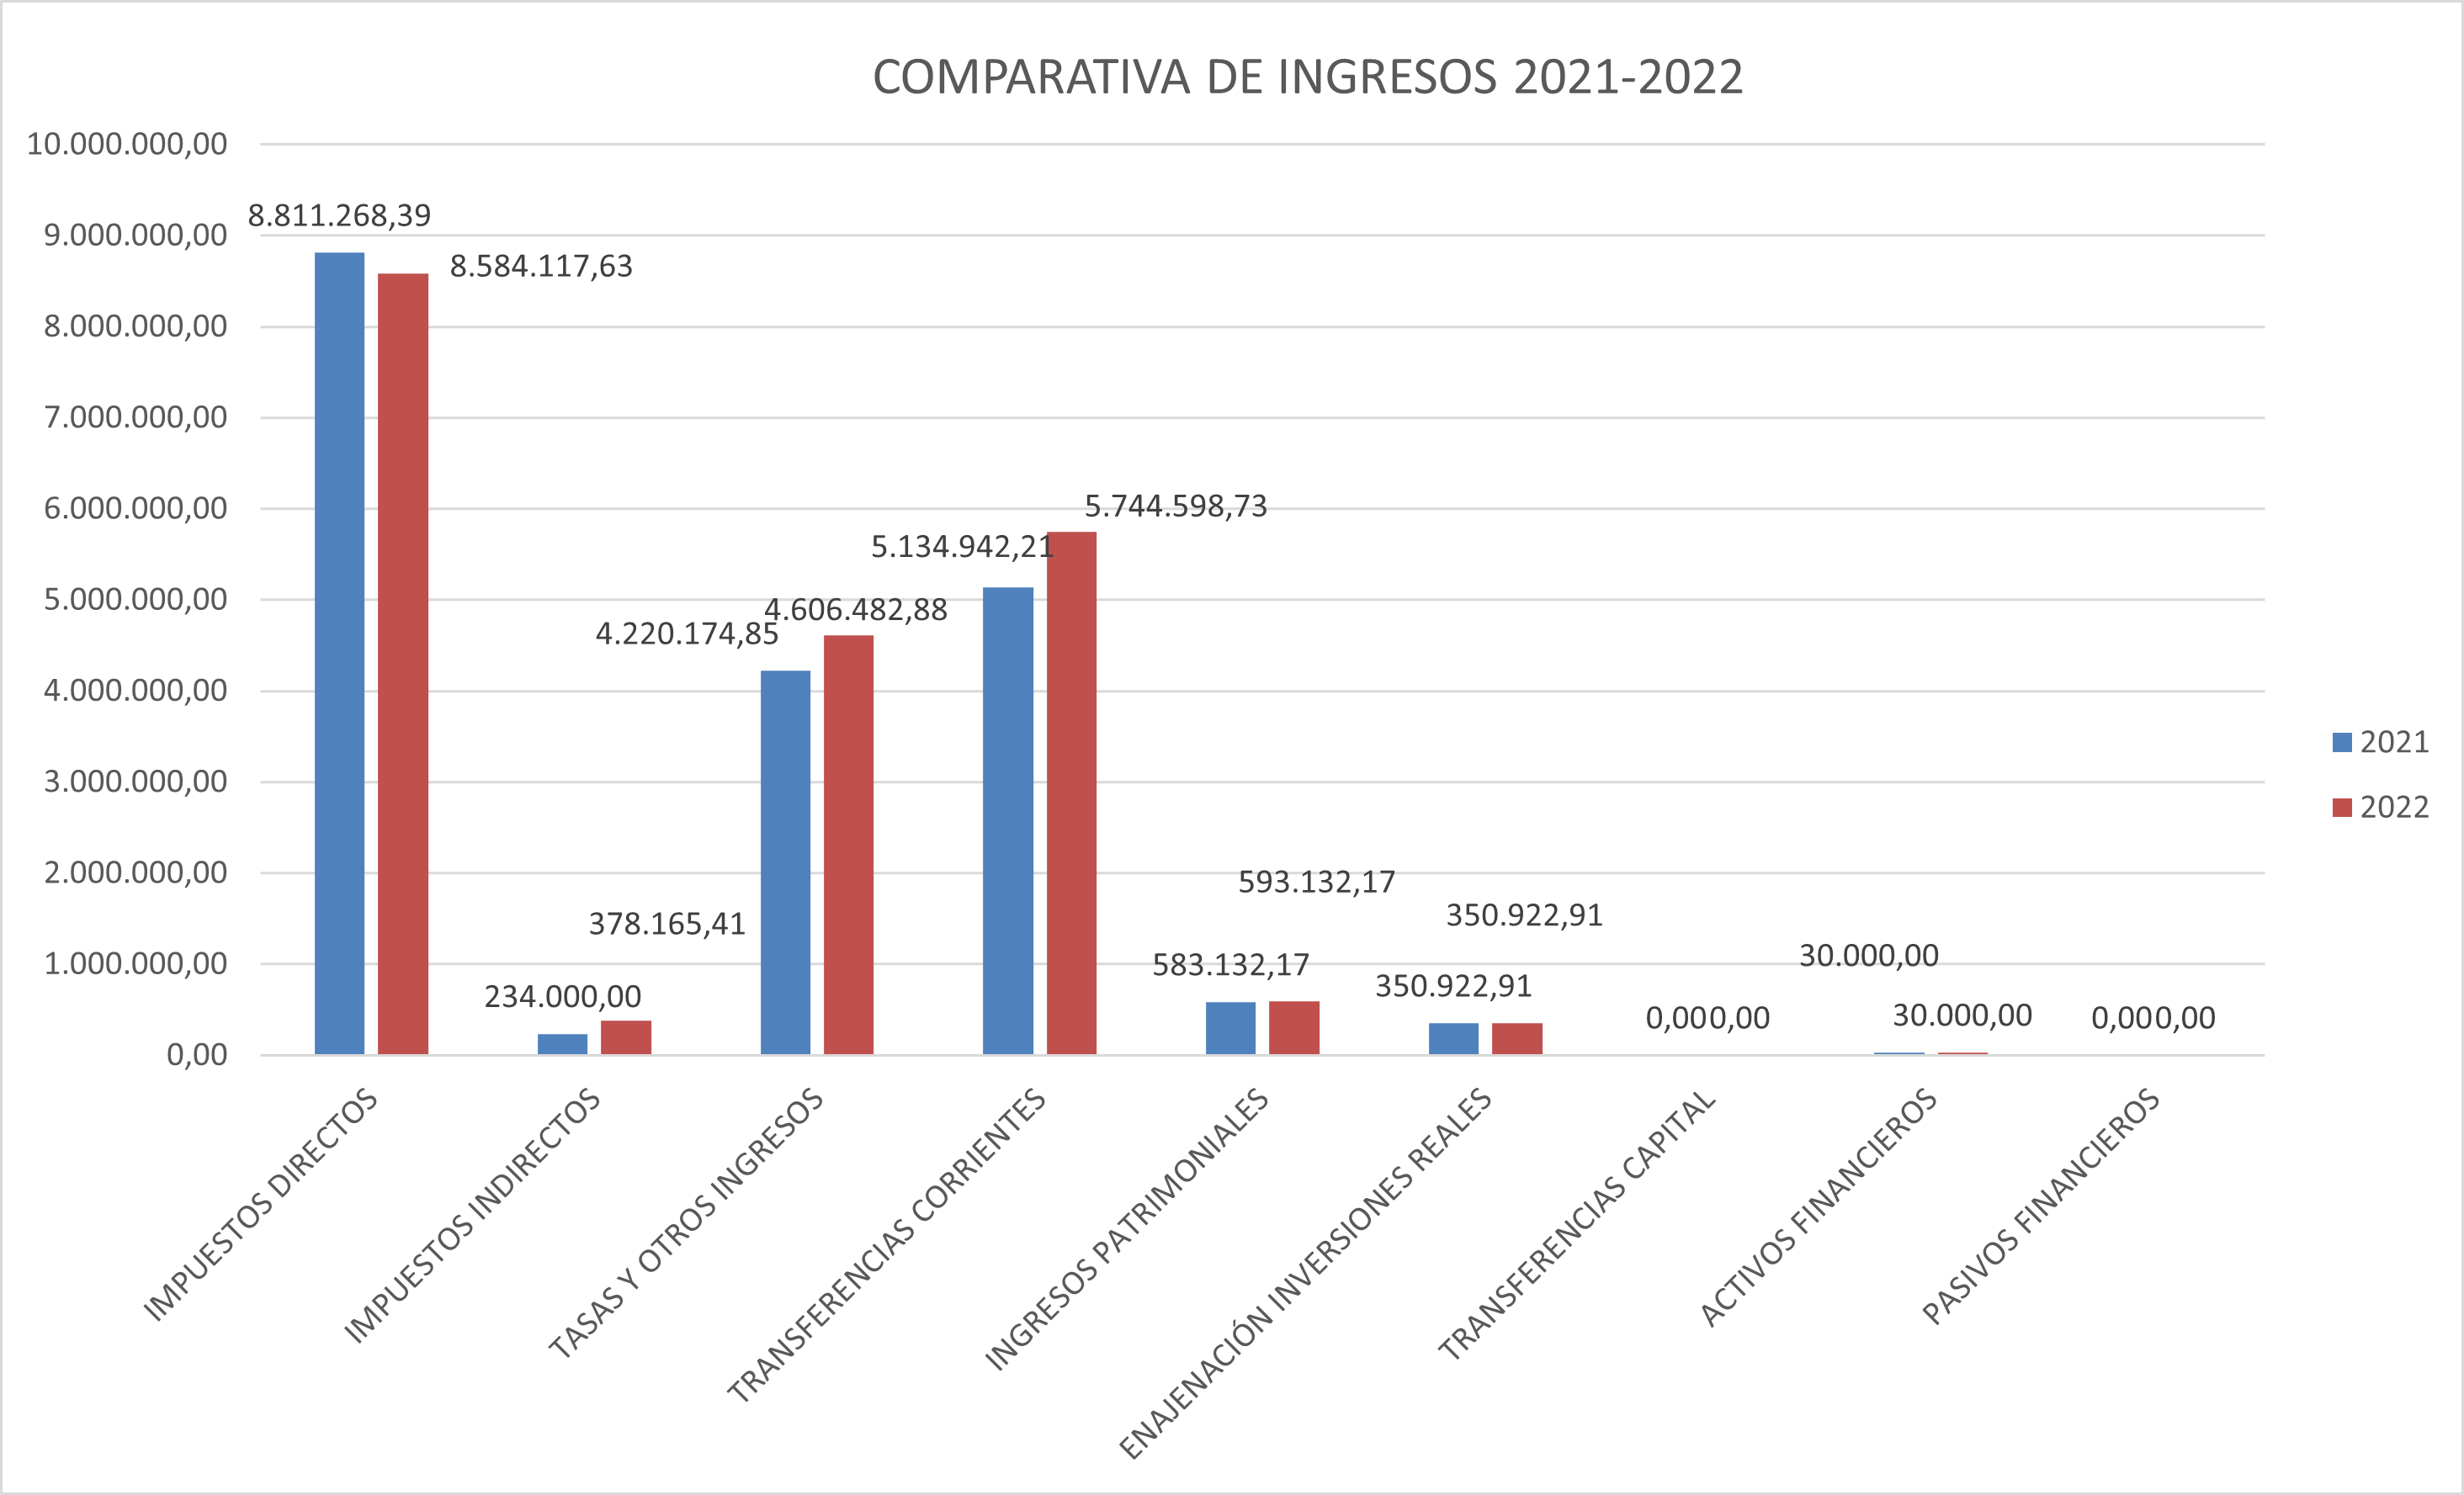 Comparativa de ingresos 2021-2022